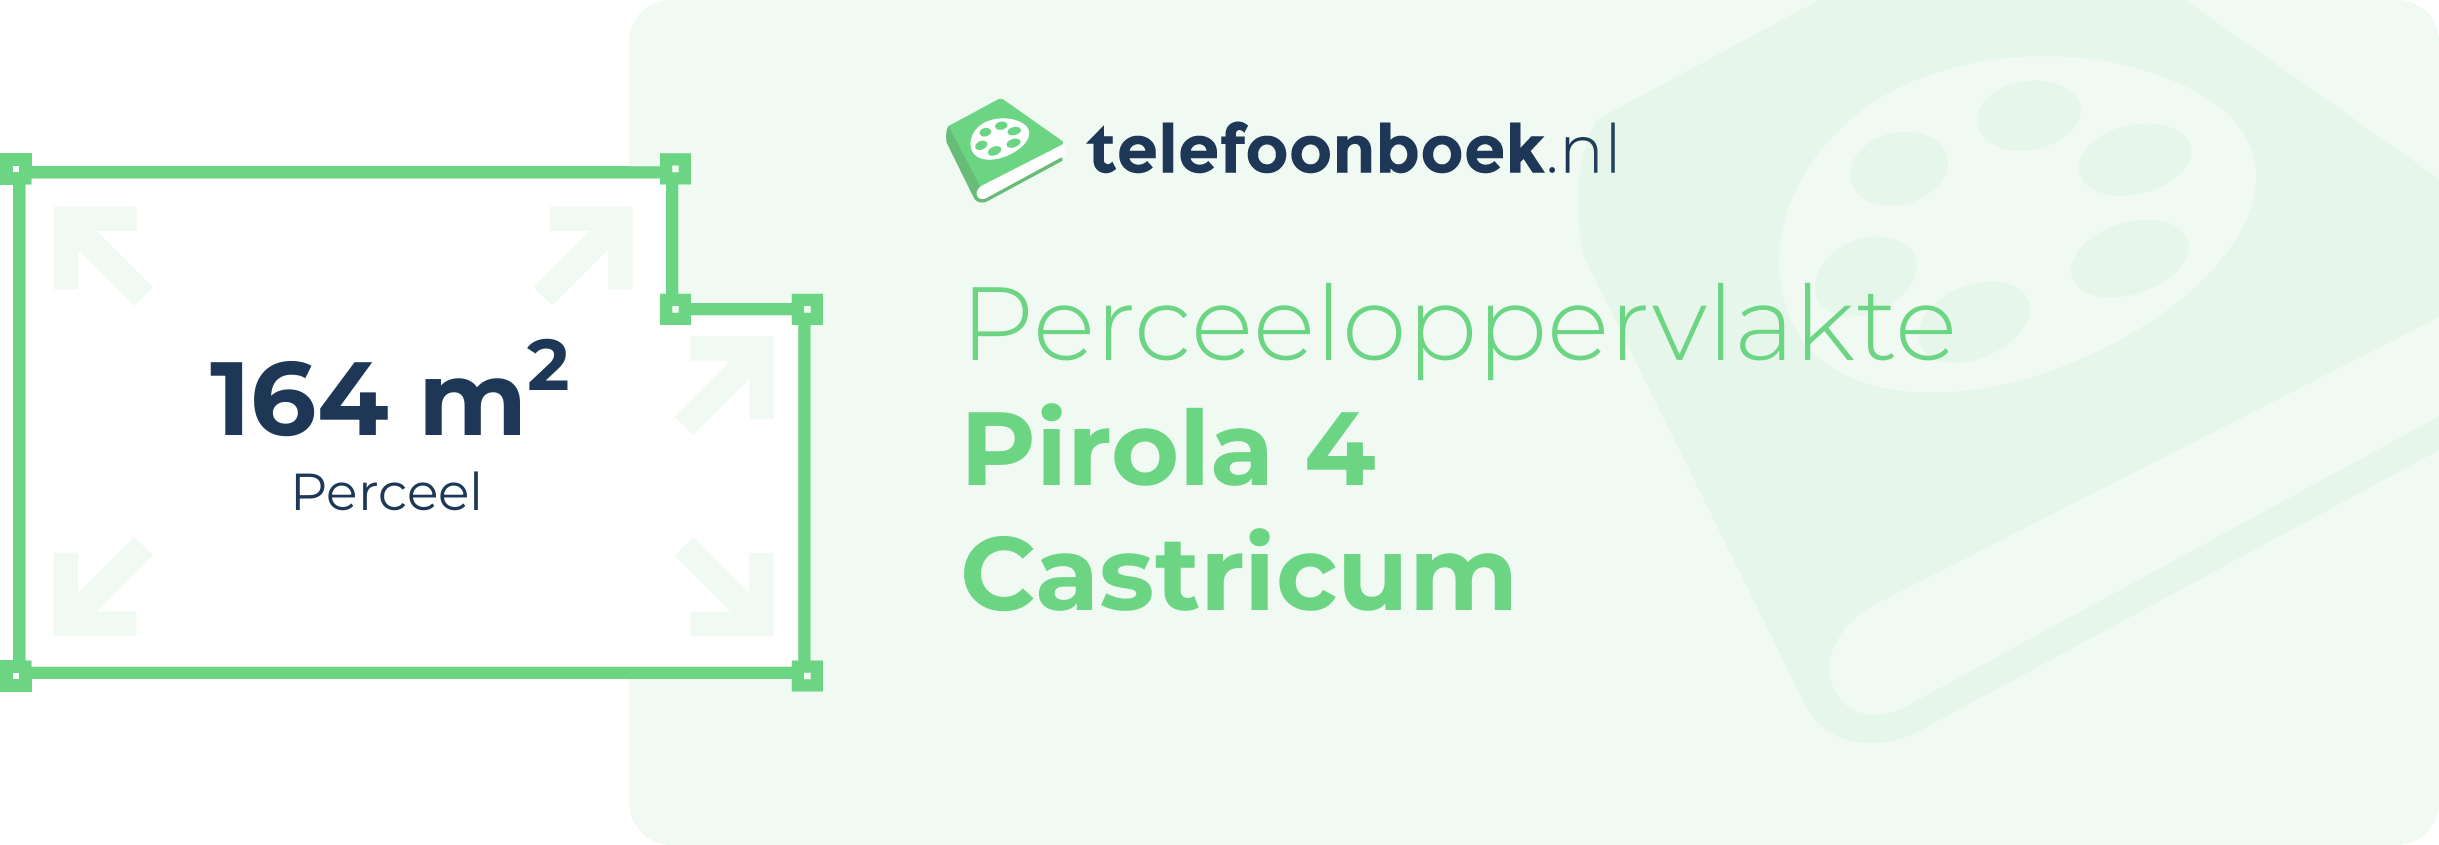 Perceeloppervlakte Pirola 4 Castricum